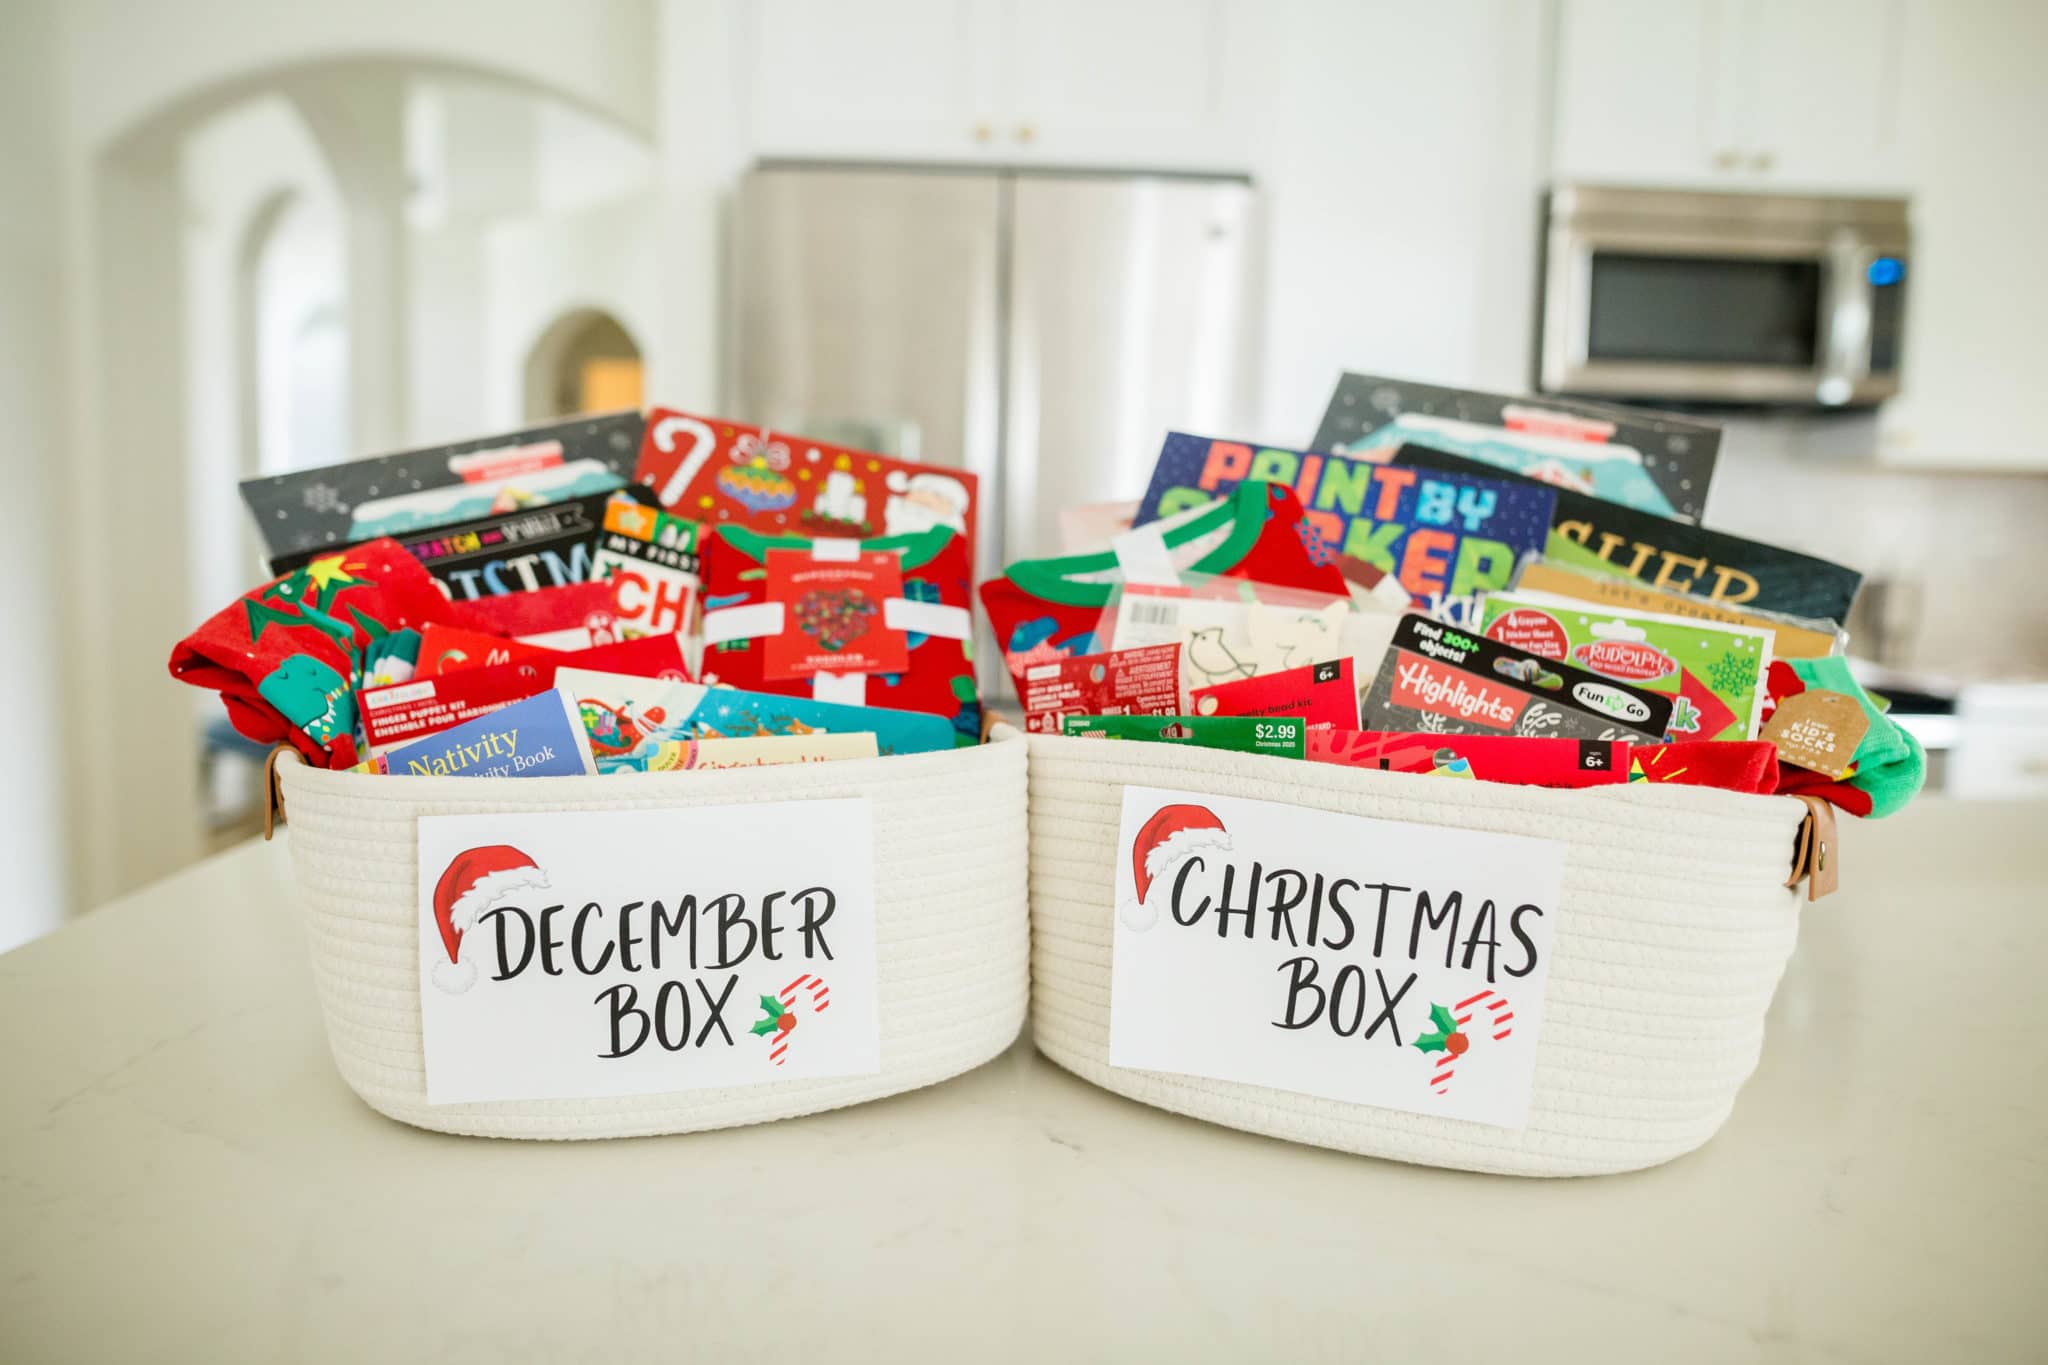 Christmas Box: How to Make a December Box + Tons of Christmas Box Ideas